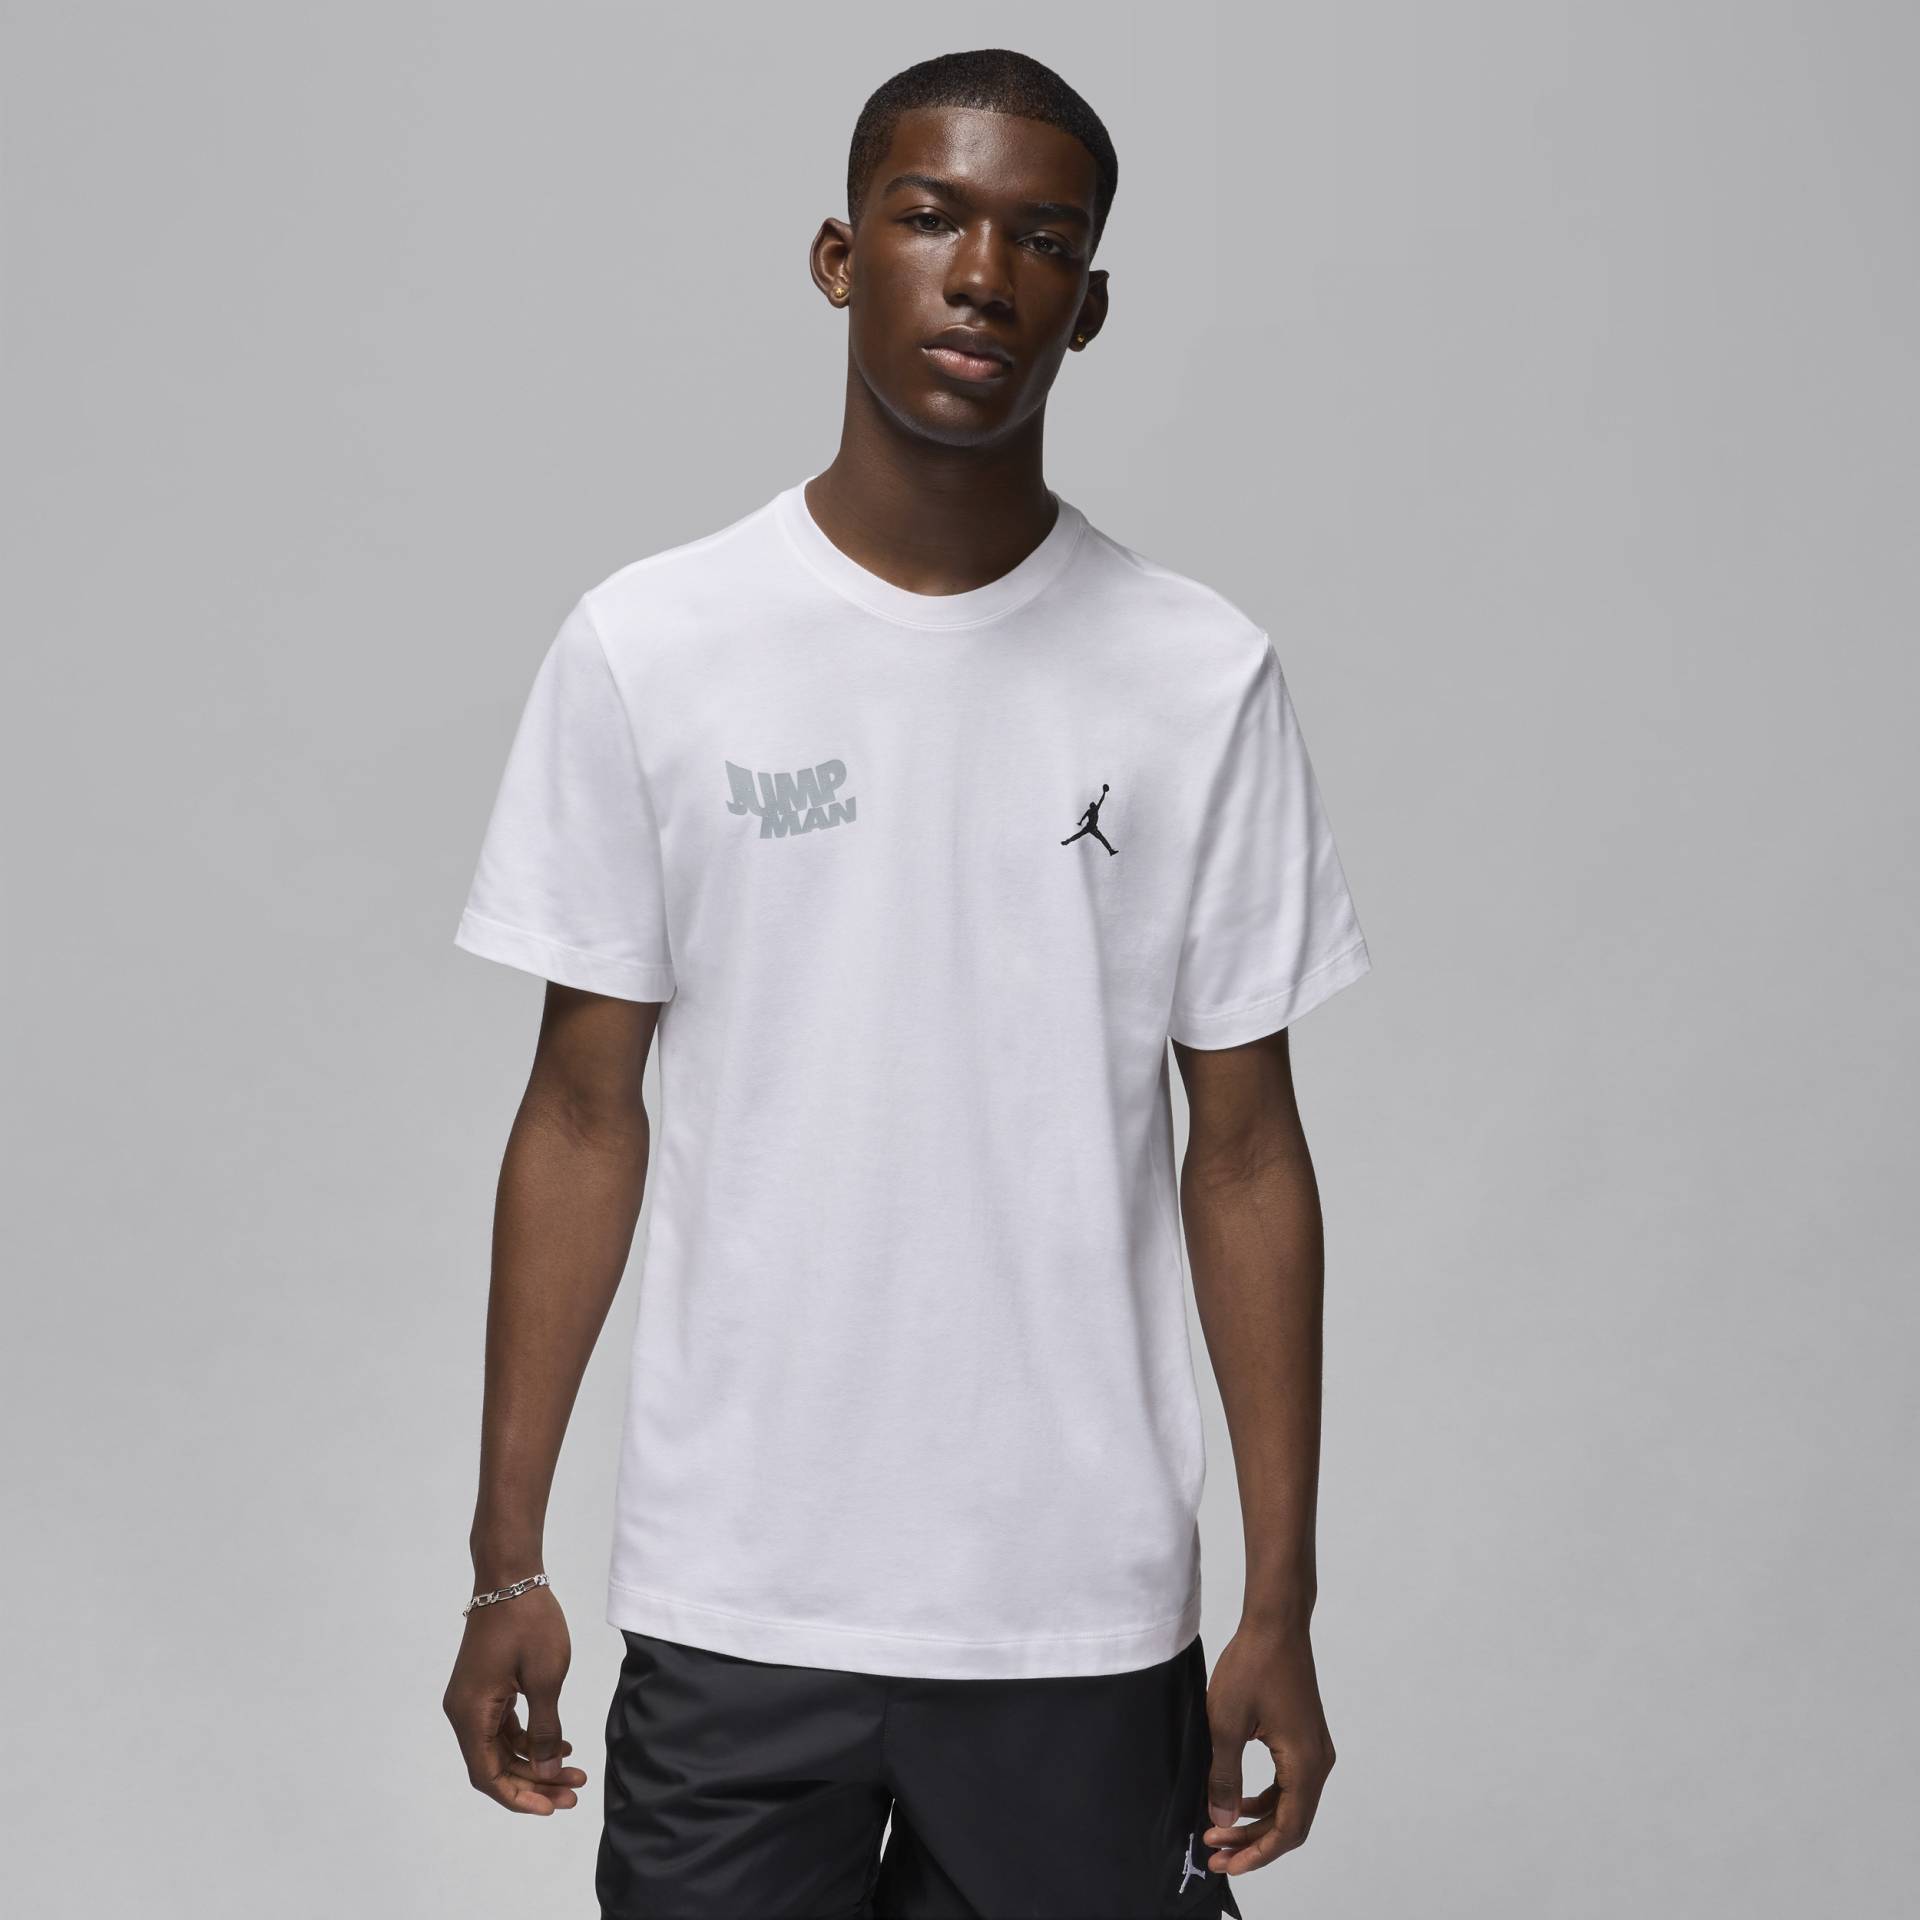 Jordan Brand Herren-T-Shirt - Weiß von Jordan